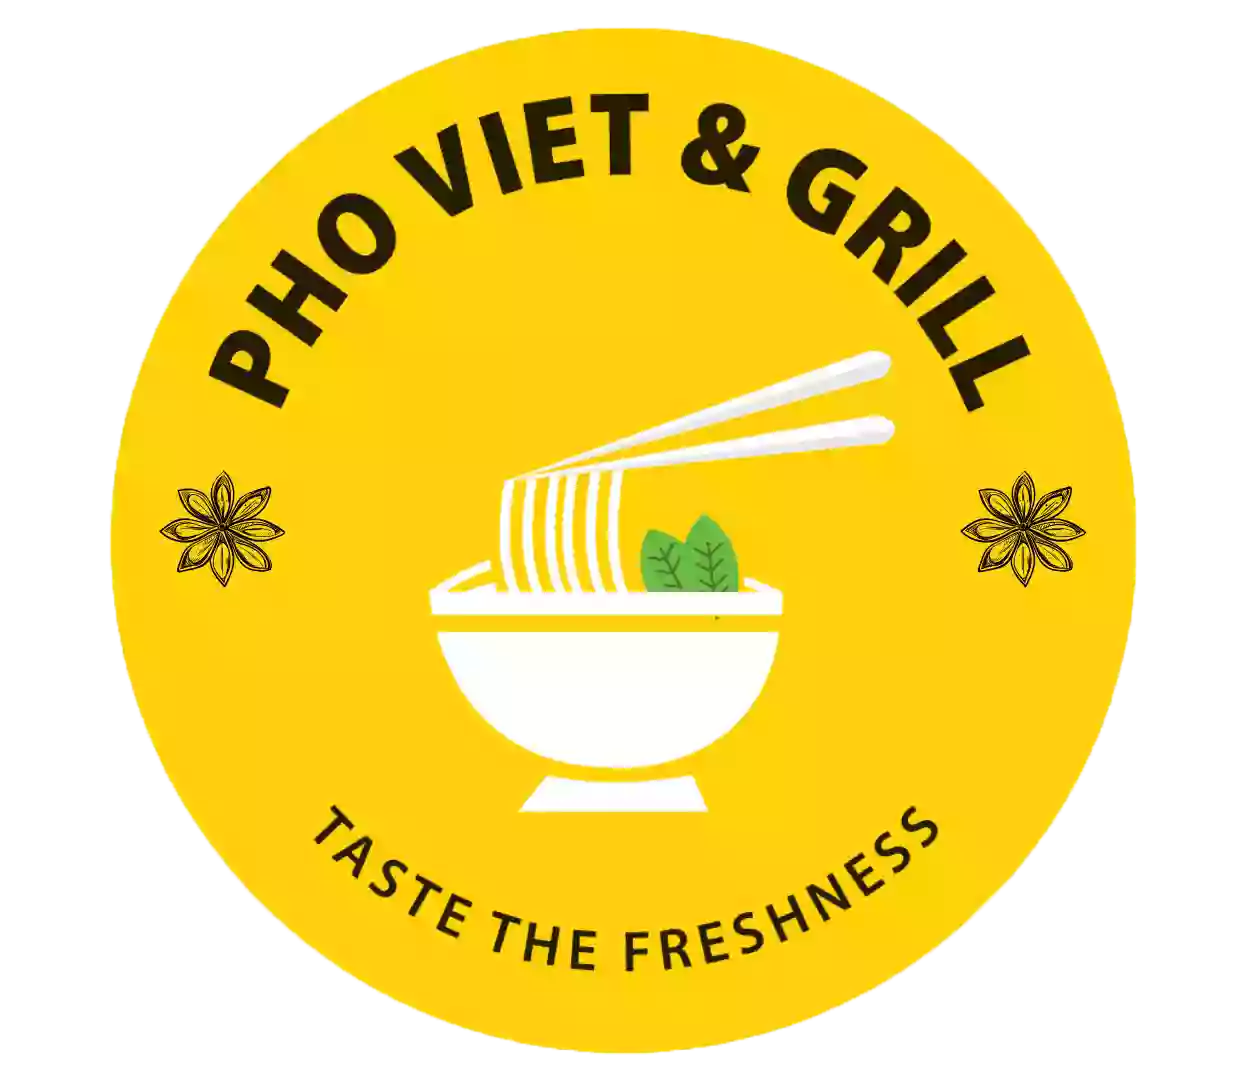 Pho Viet & Grill